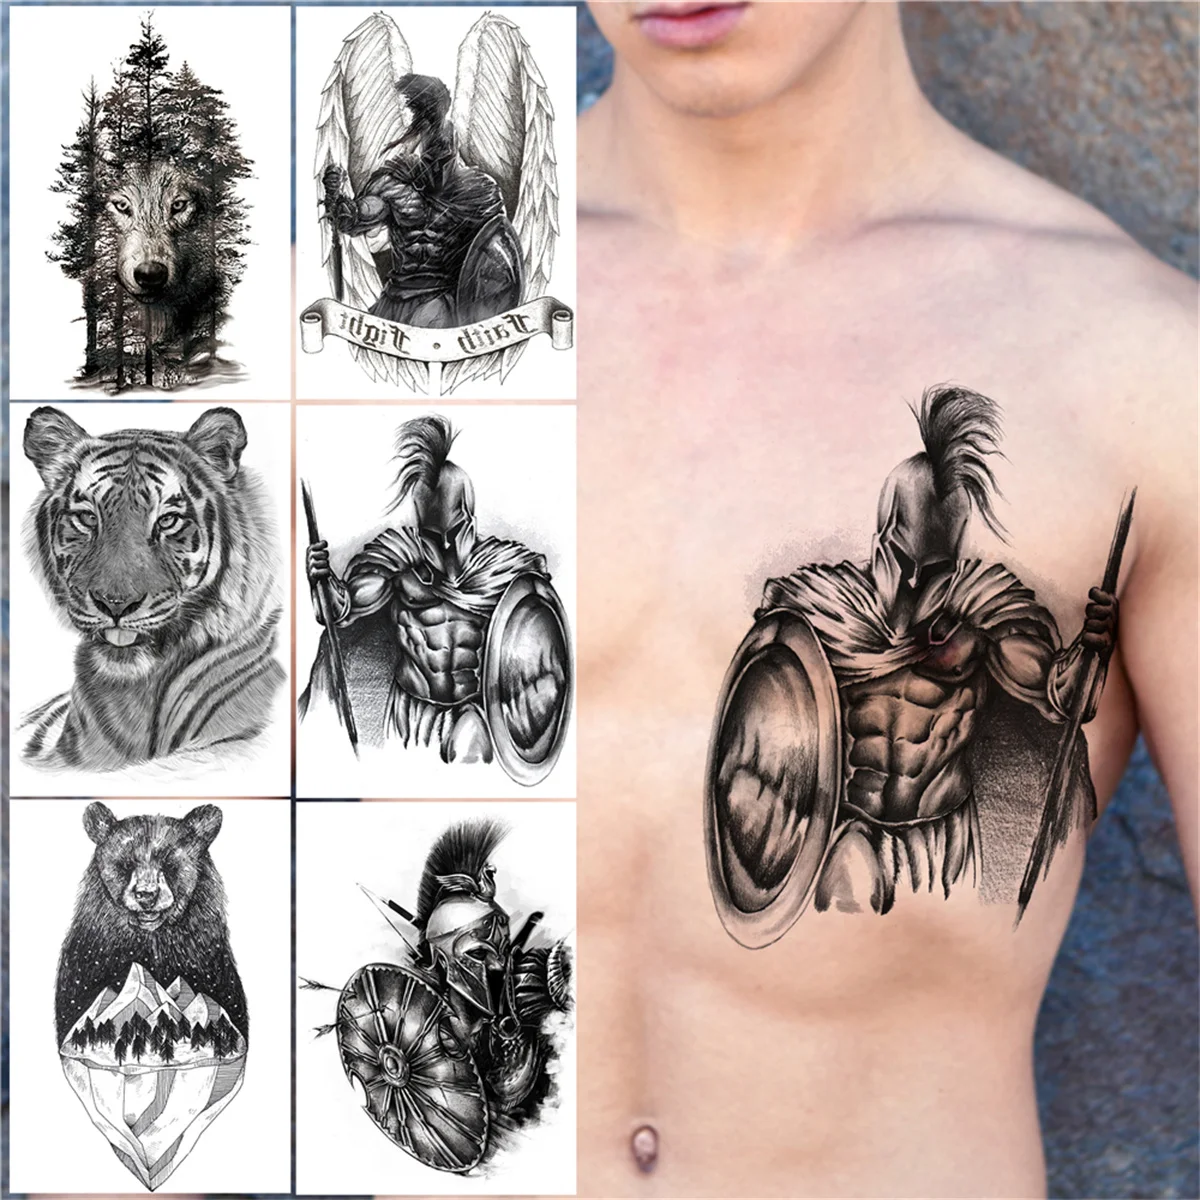 Black Soldier Warrior Temporary Tattoos For Men Women Kid Wolf Tiger Tattoo Sticker Realistic Fake Forest Beer Tatoos Waterproof